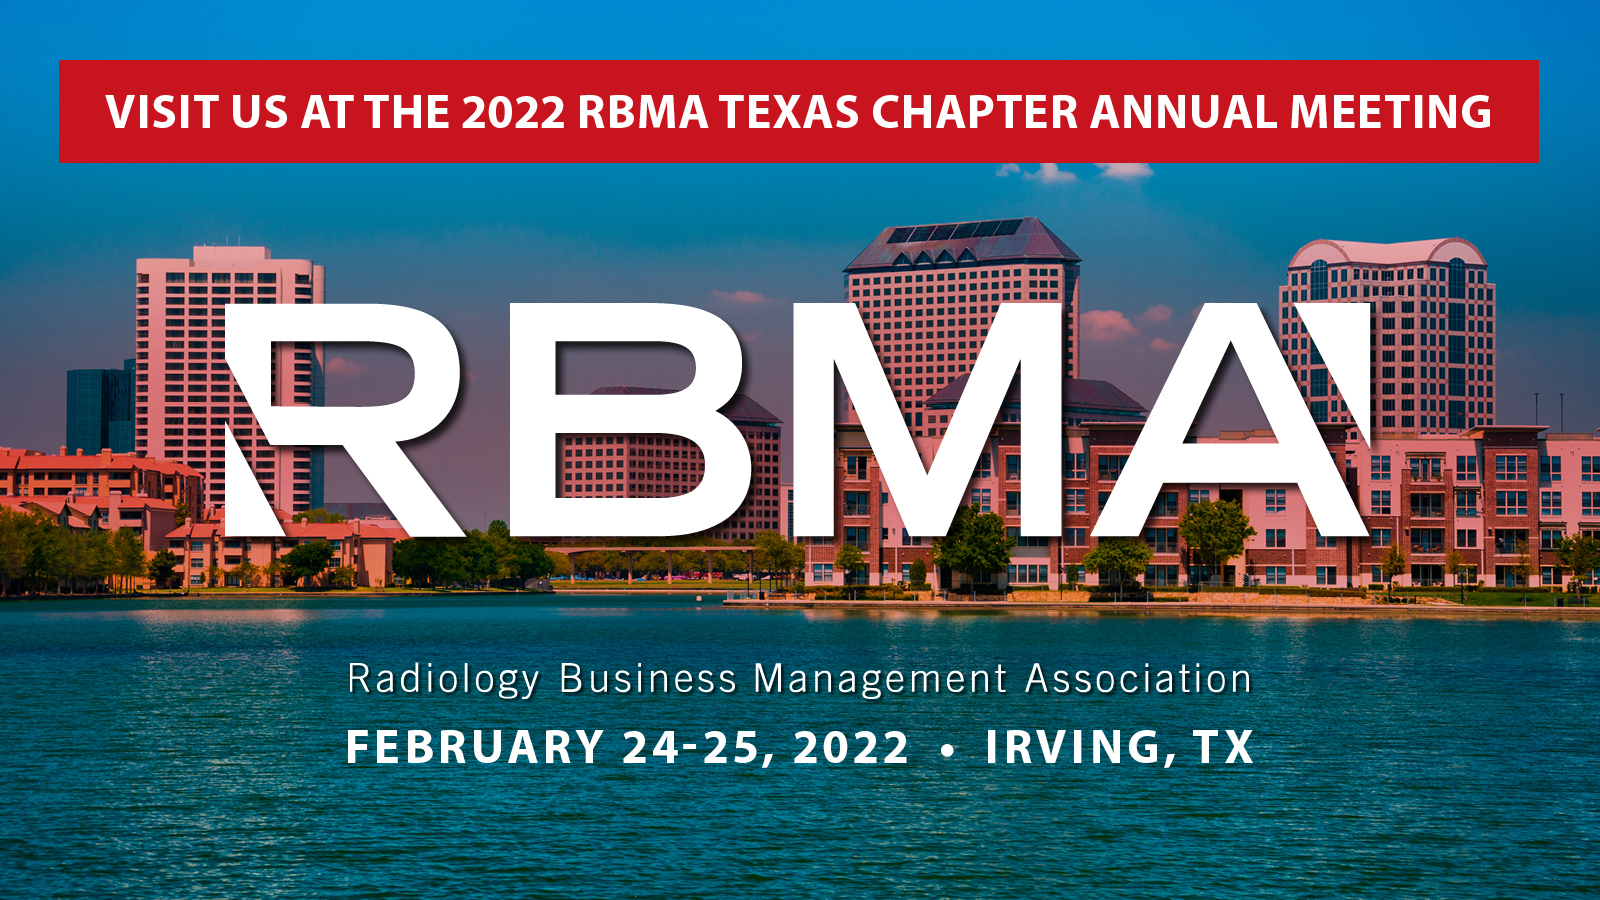 RBMA Texas 2022 eRAD